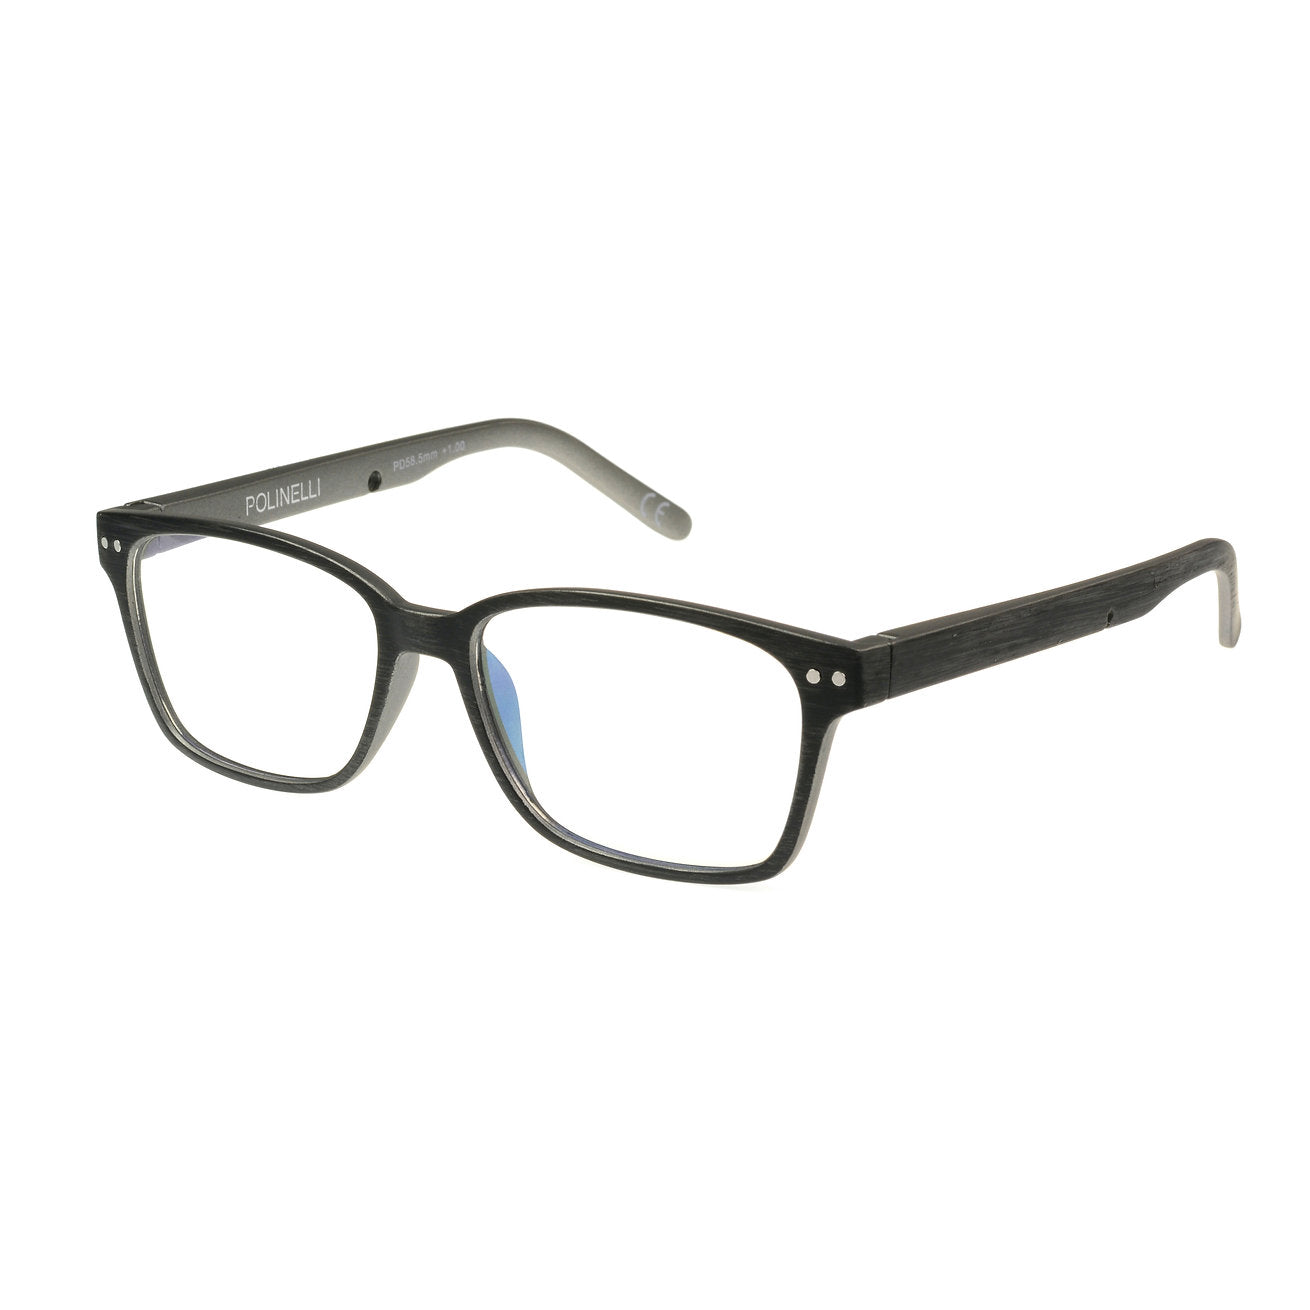 Polinelli eyeglasses model P302 metallic